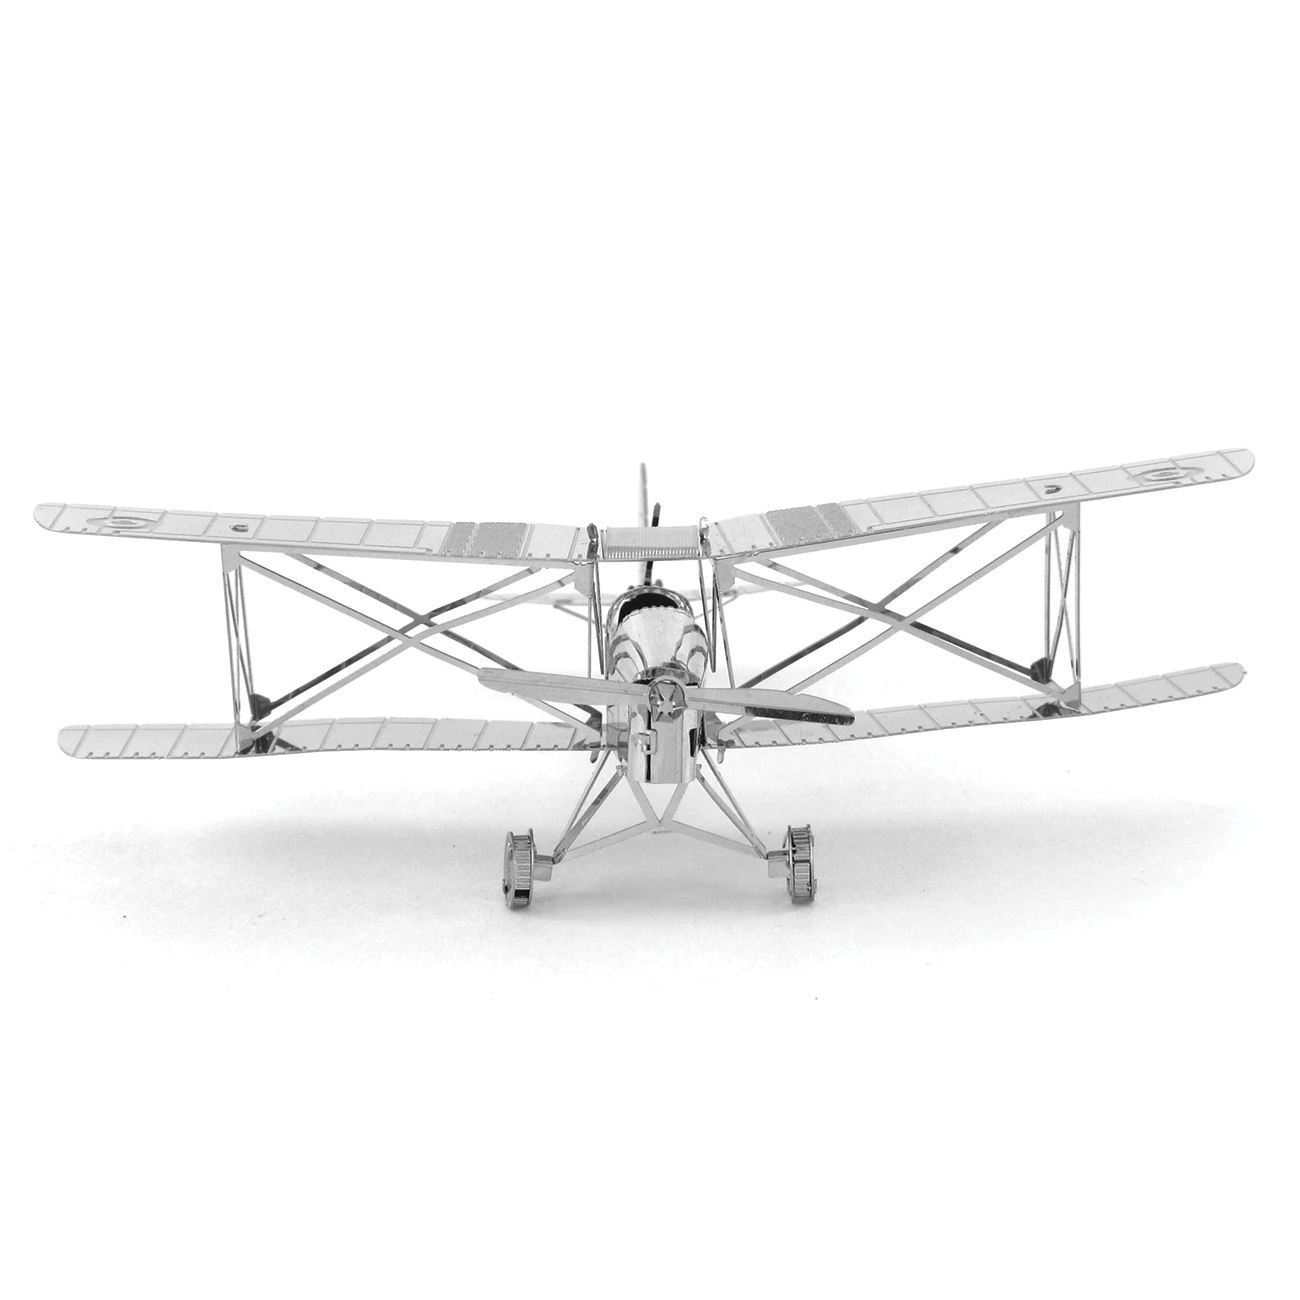 Metal Earth 3D Laser Cut Miniature Model Kit De Havilland Tiger Moth